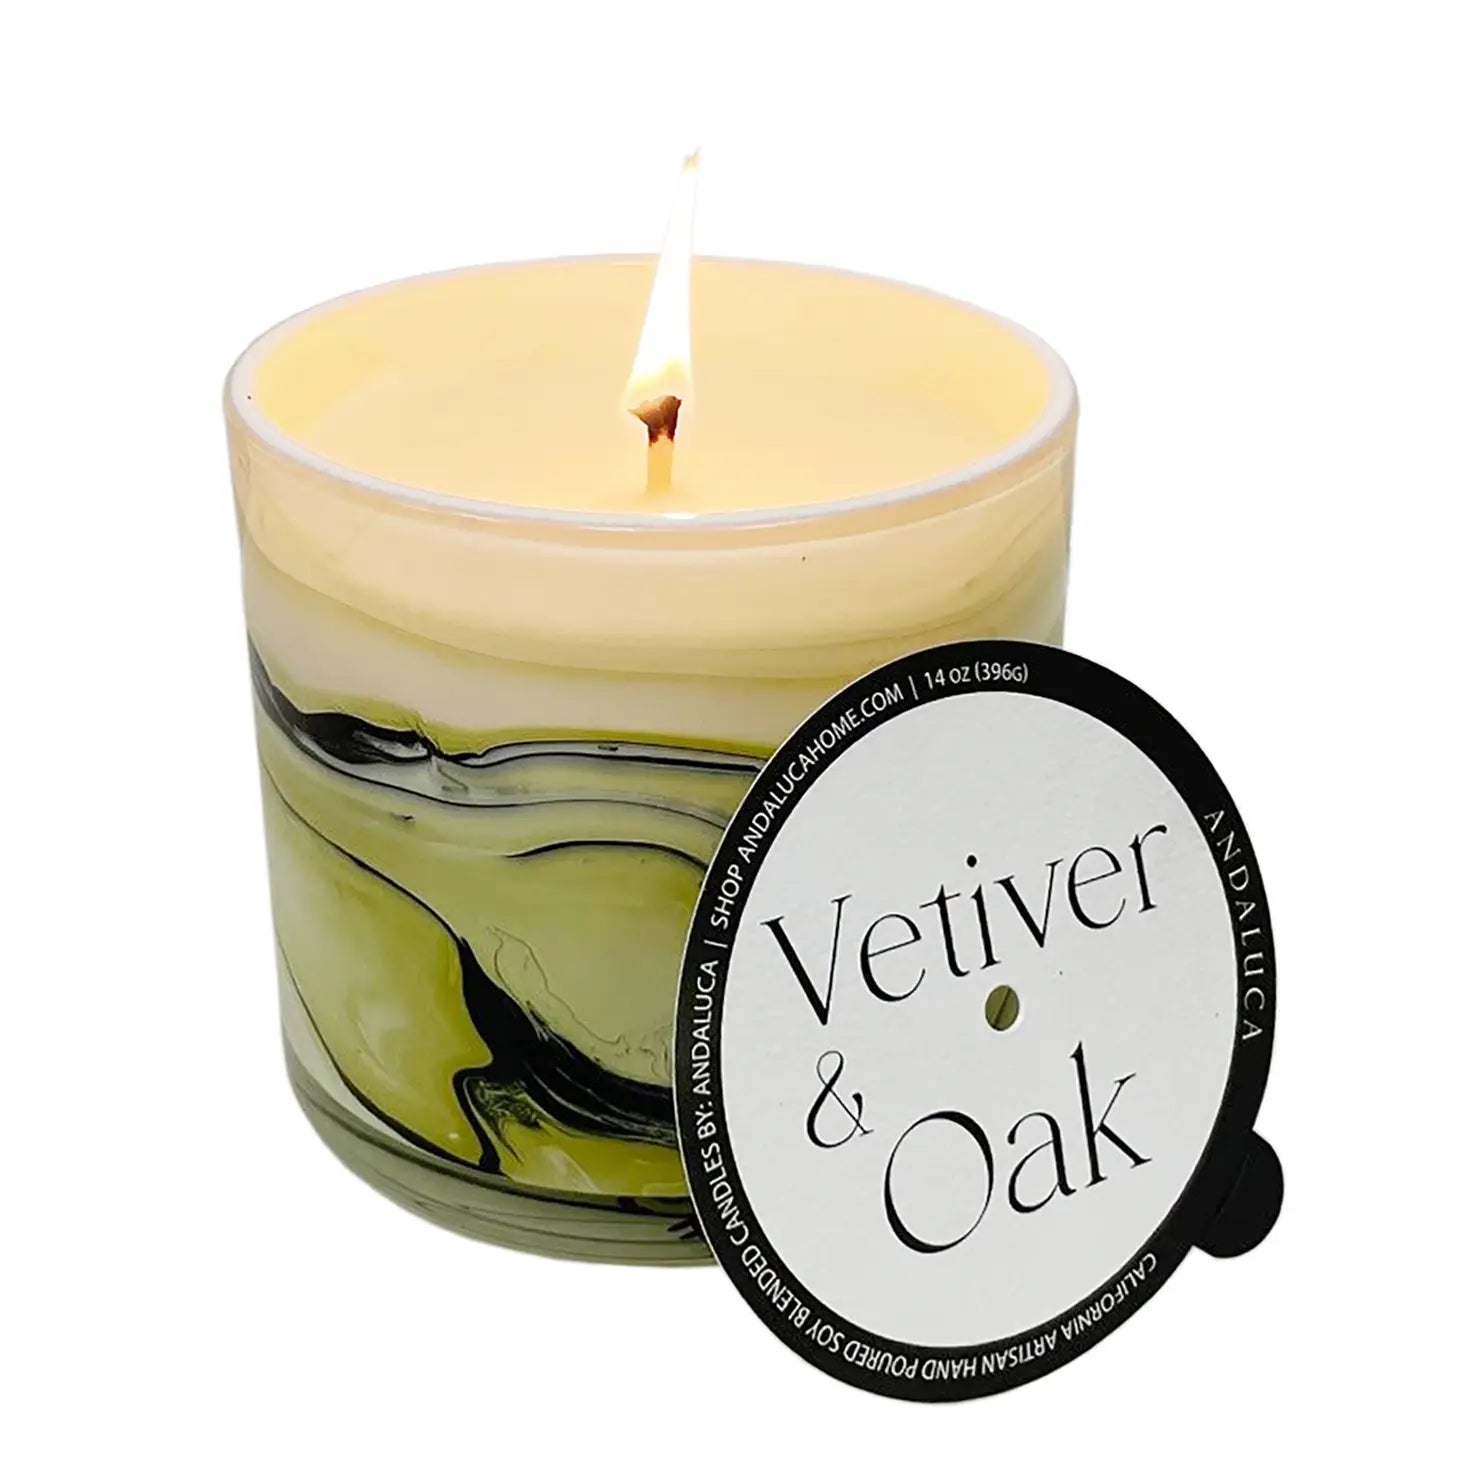 Andaluca Vetiver & Oak 14 oz. Swirl Glass Candle